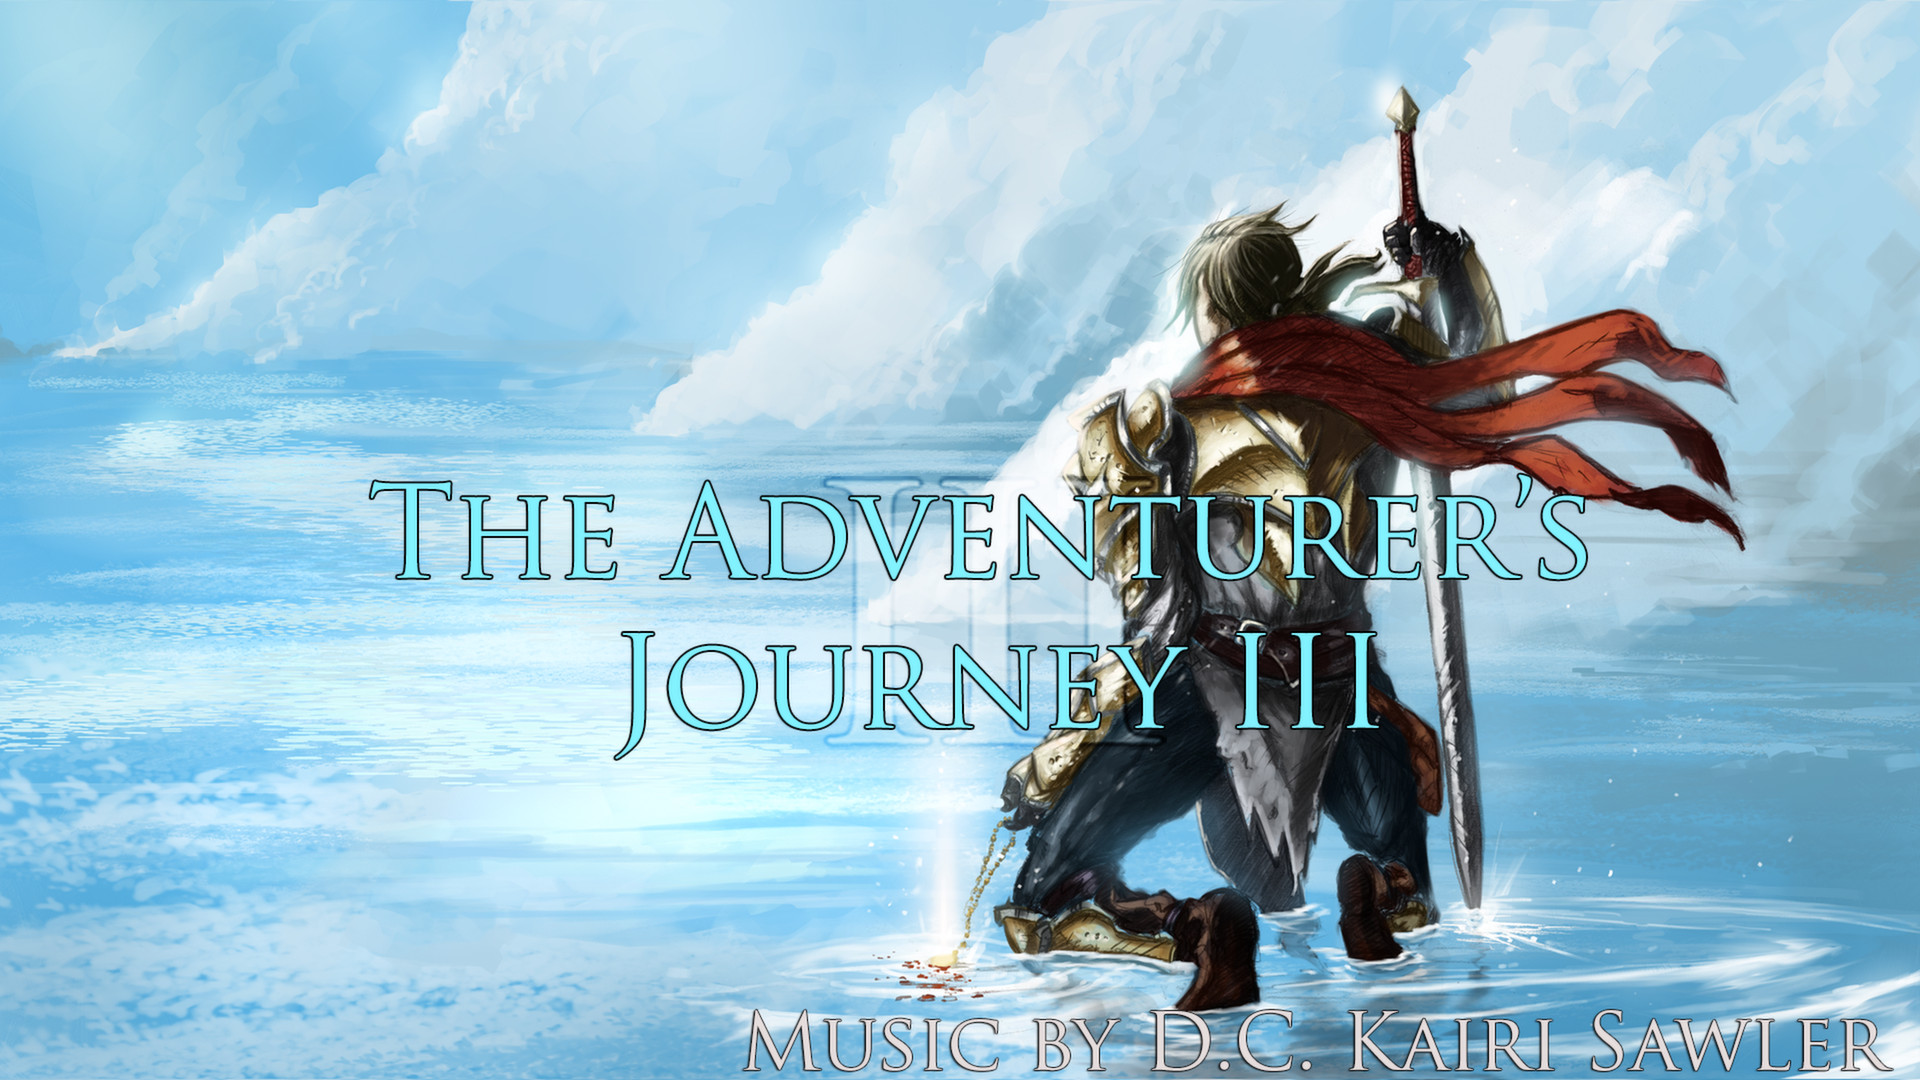 RPG Maker VX Ace - The Adventurer's Journey III DLC Steam CD Key 4.51$